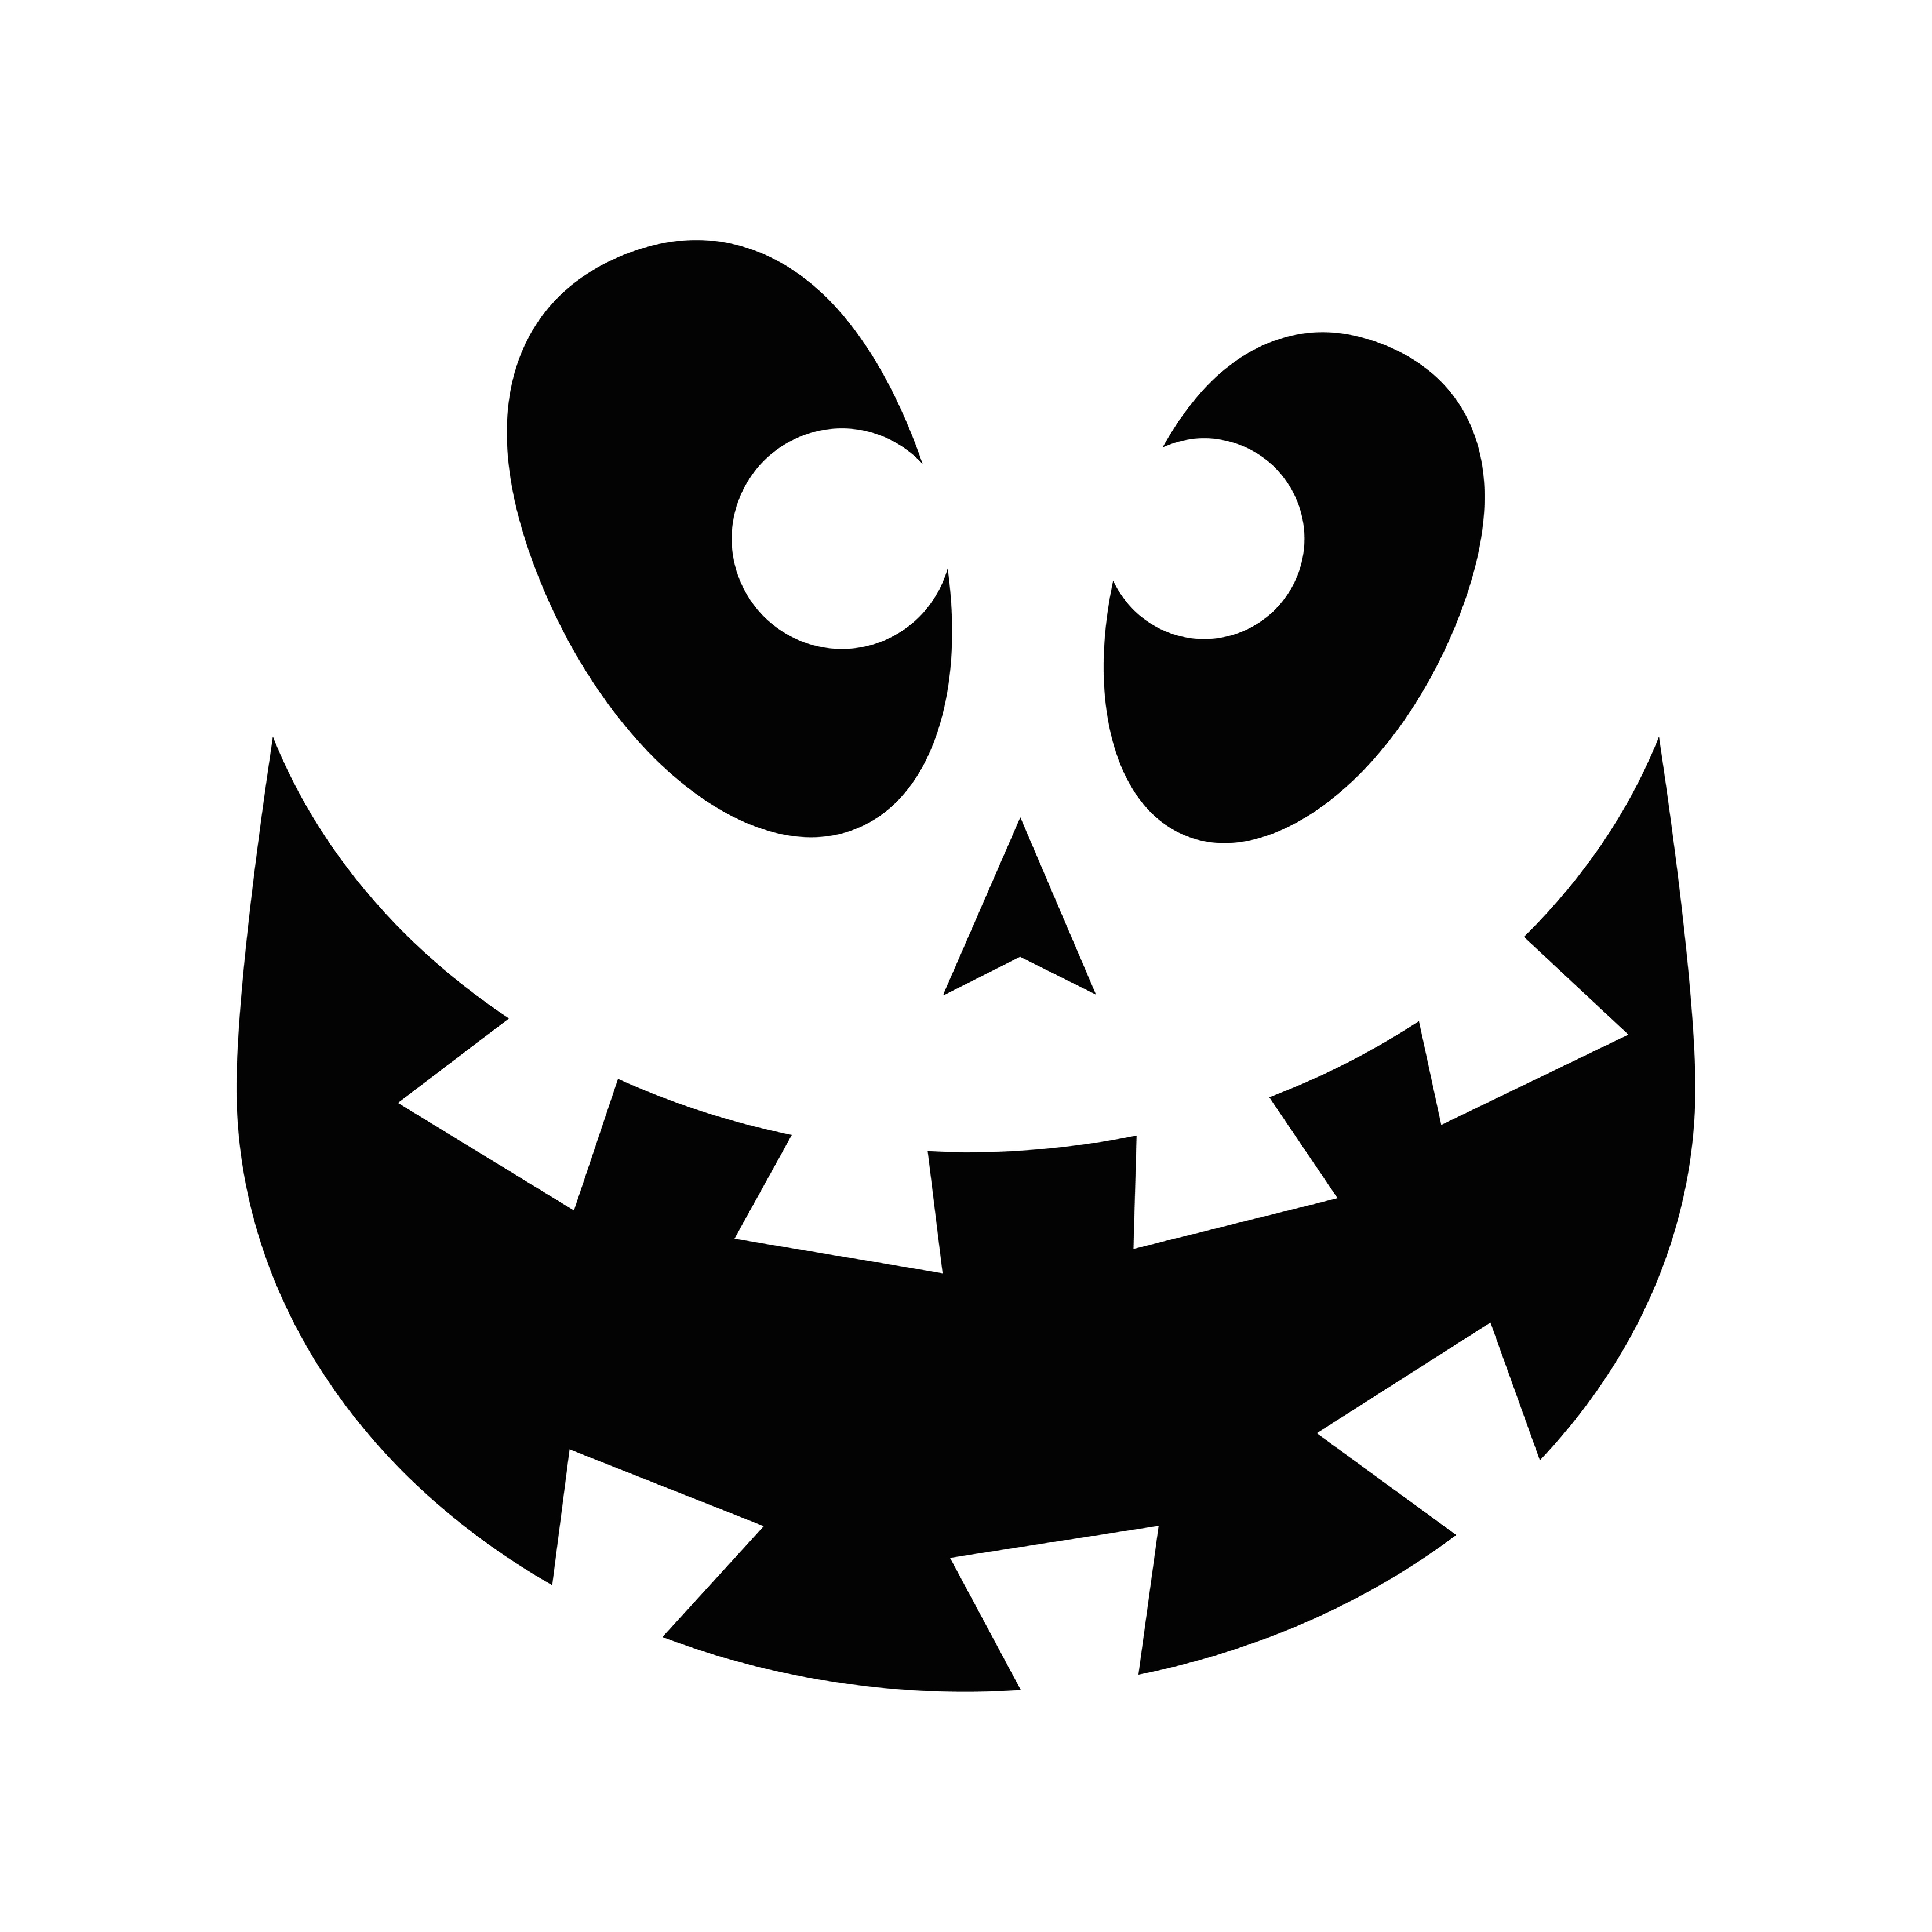 halloween pumpkin face emoji silhouette style icon 4220174 Vector Art ...